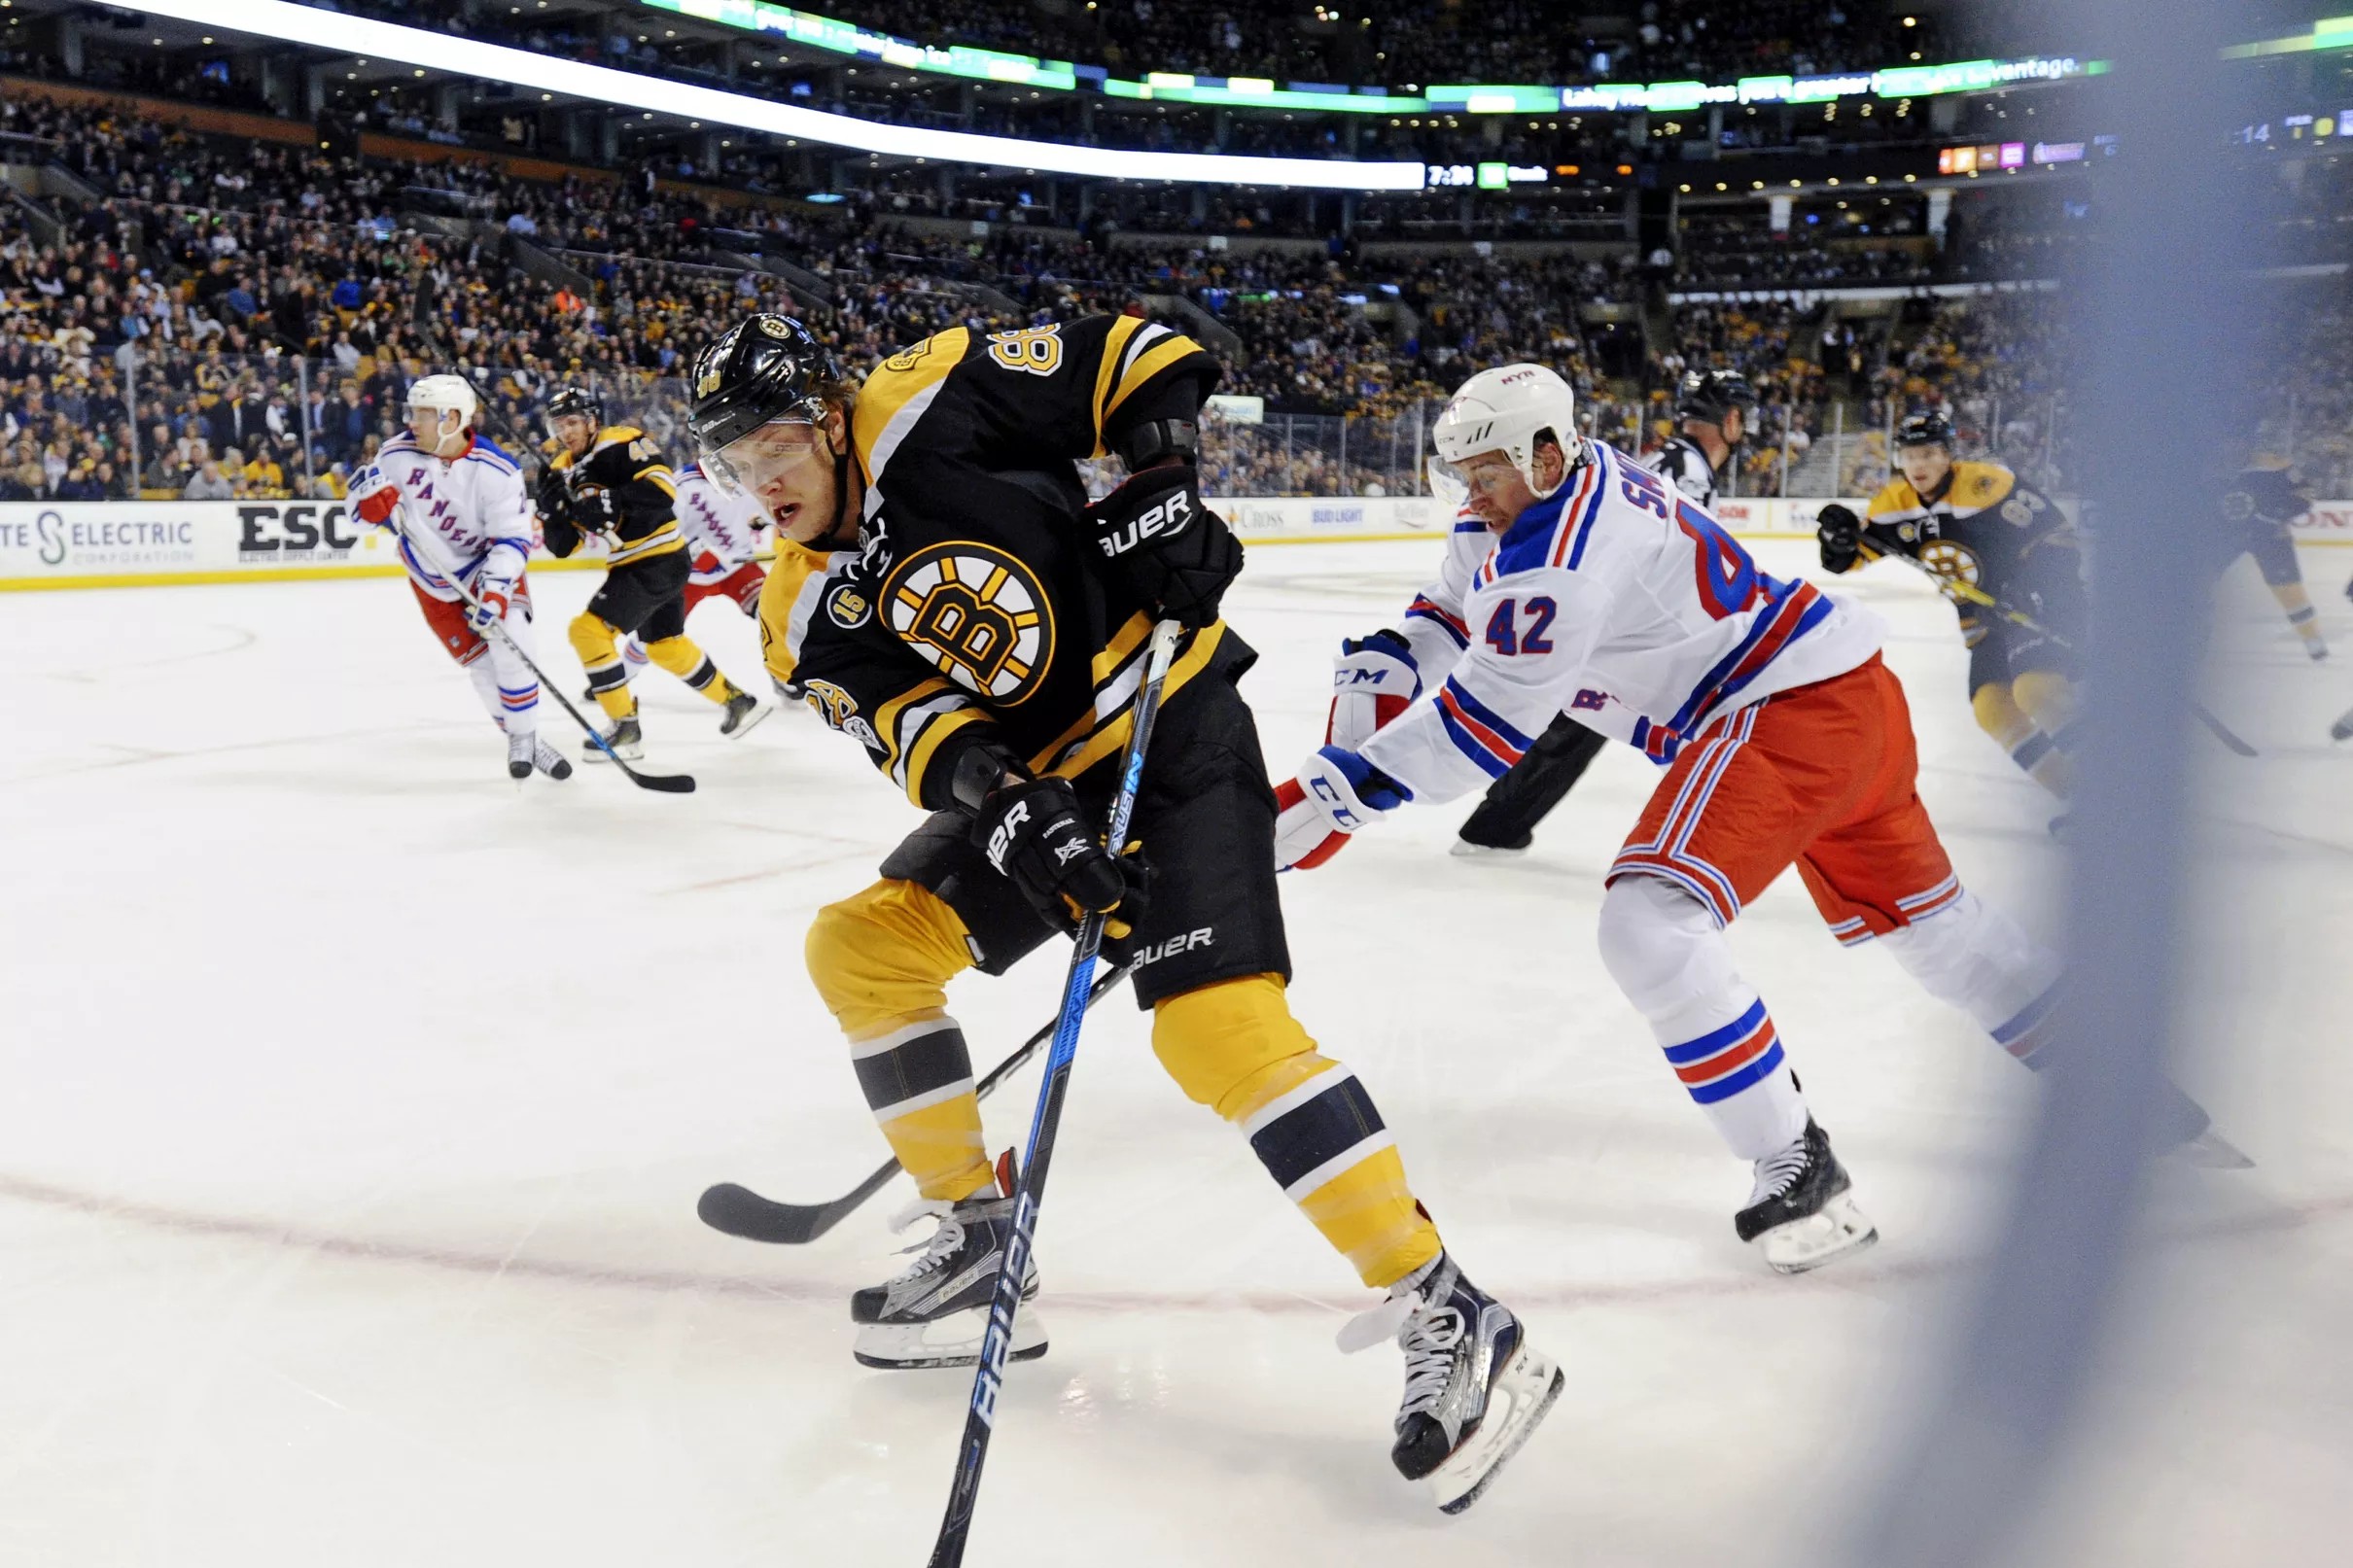 Bruins vs. Rangers 11/8/17 PREVIEW Empire State Showdown